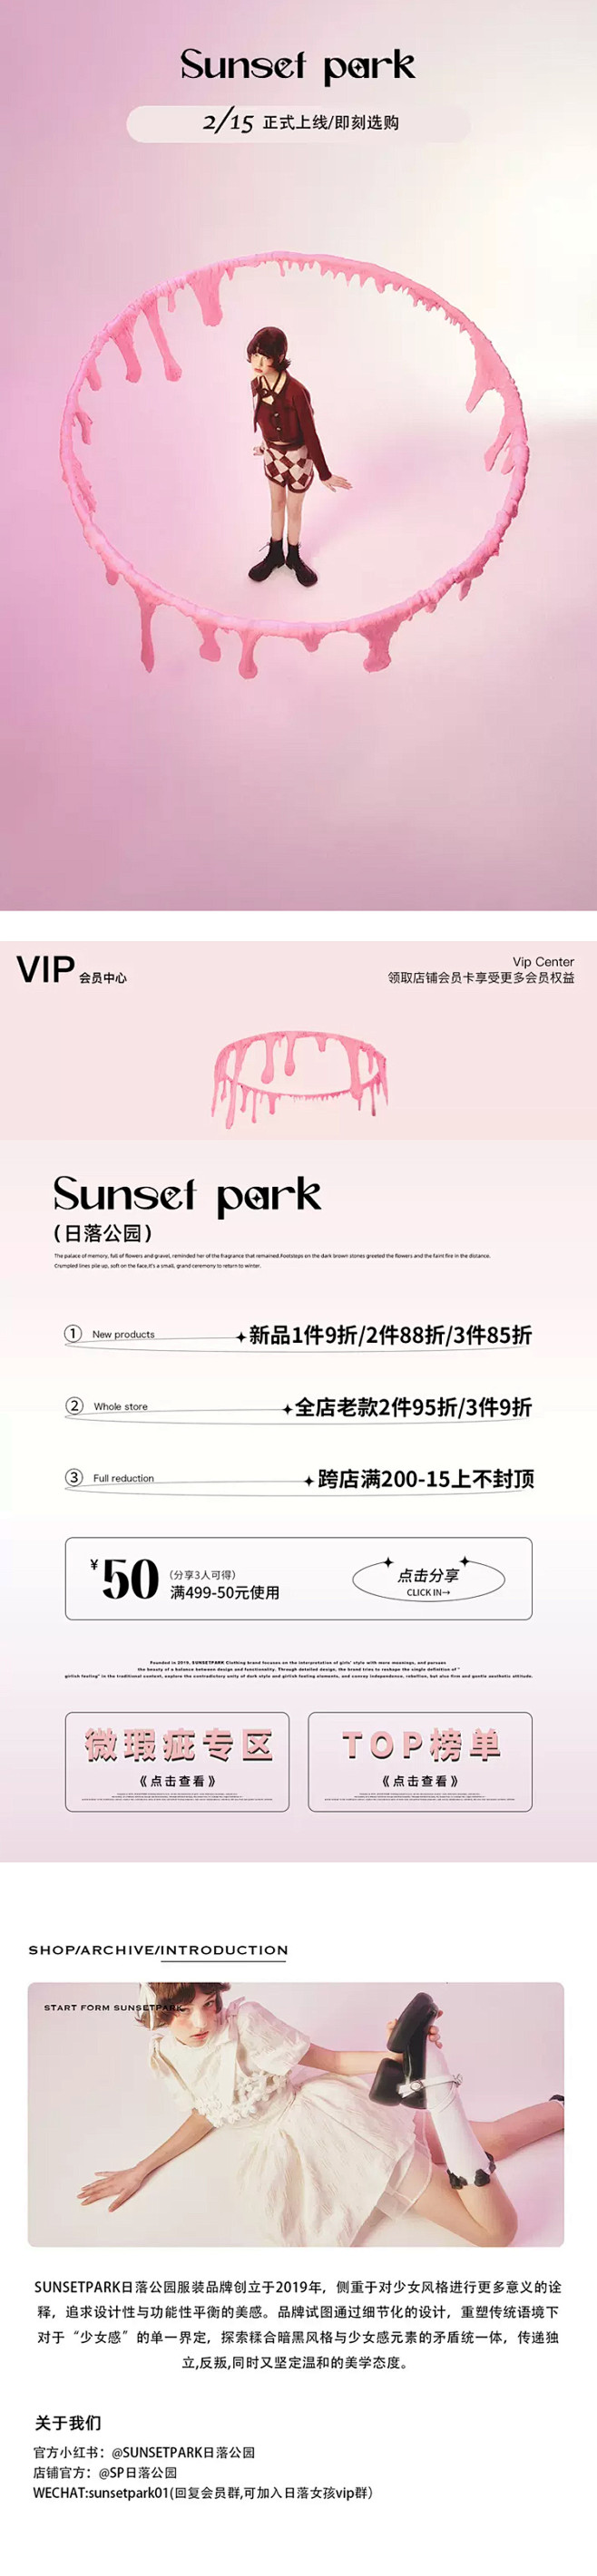 SunsetPark日落公园